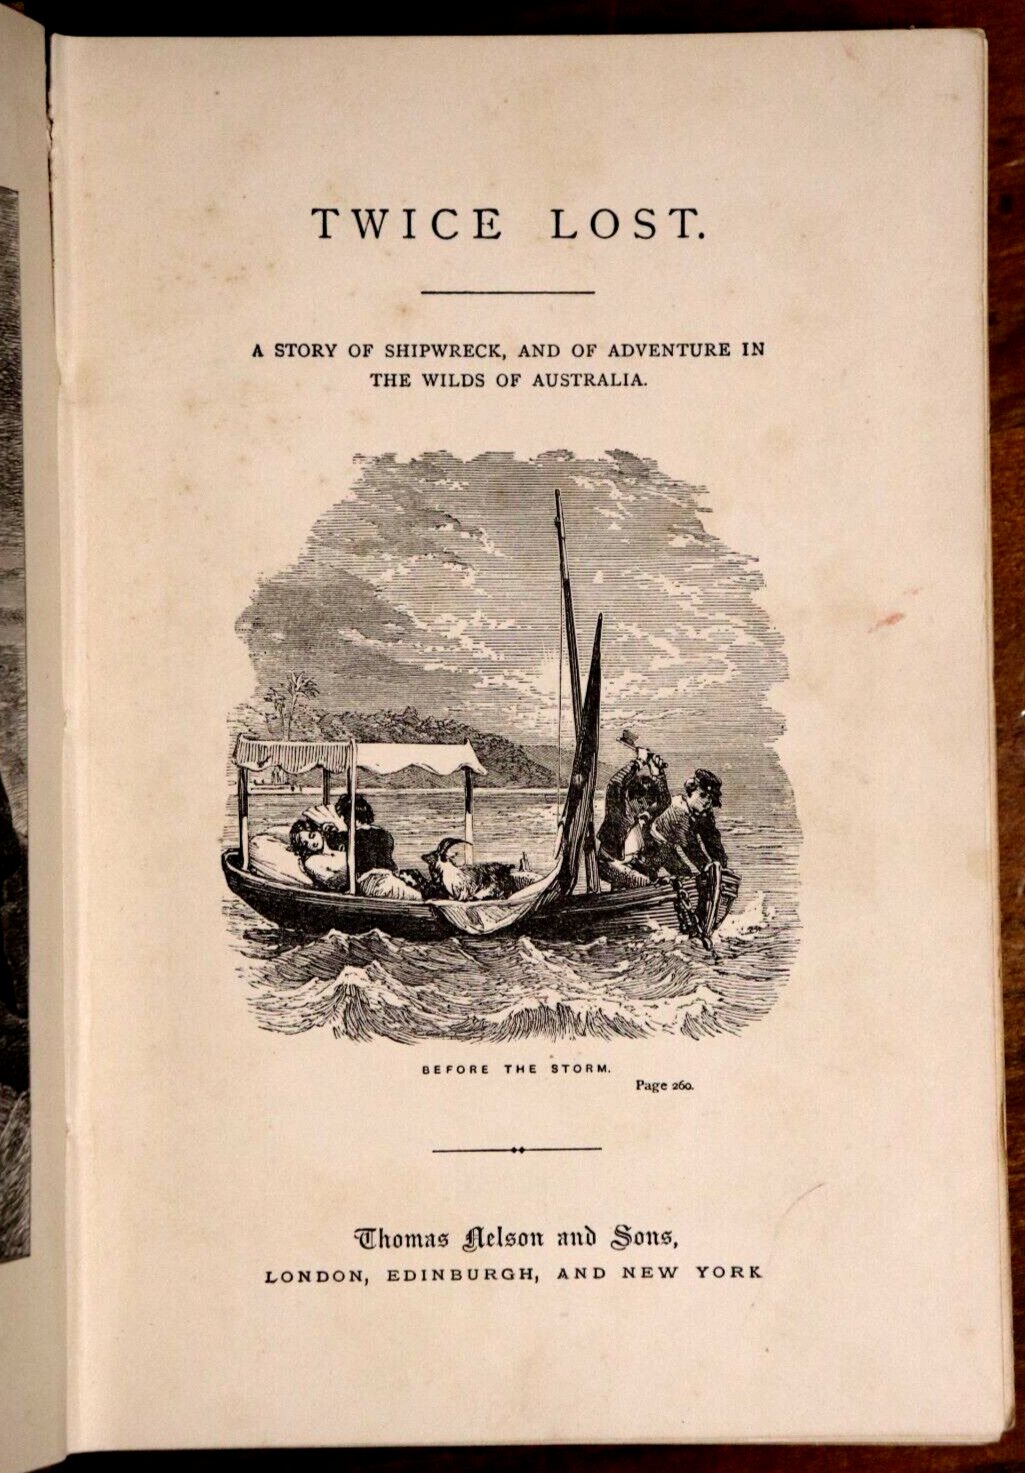 1883 Twice Lost by W.H.G. Kingston Antiquarian Australian Fiction Book - 0